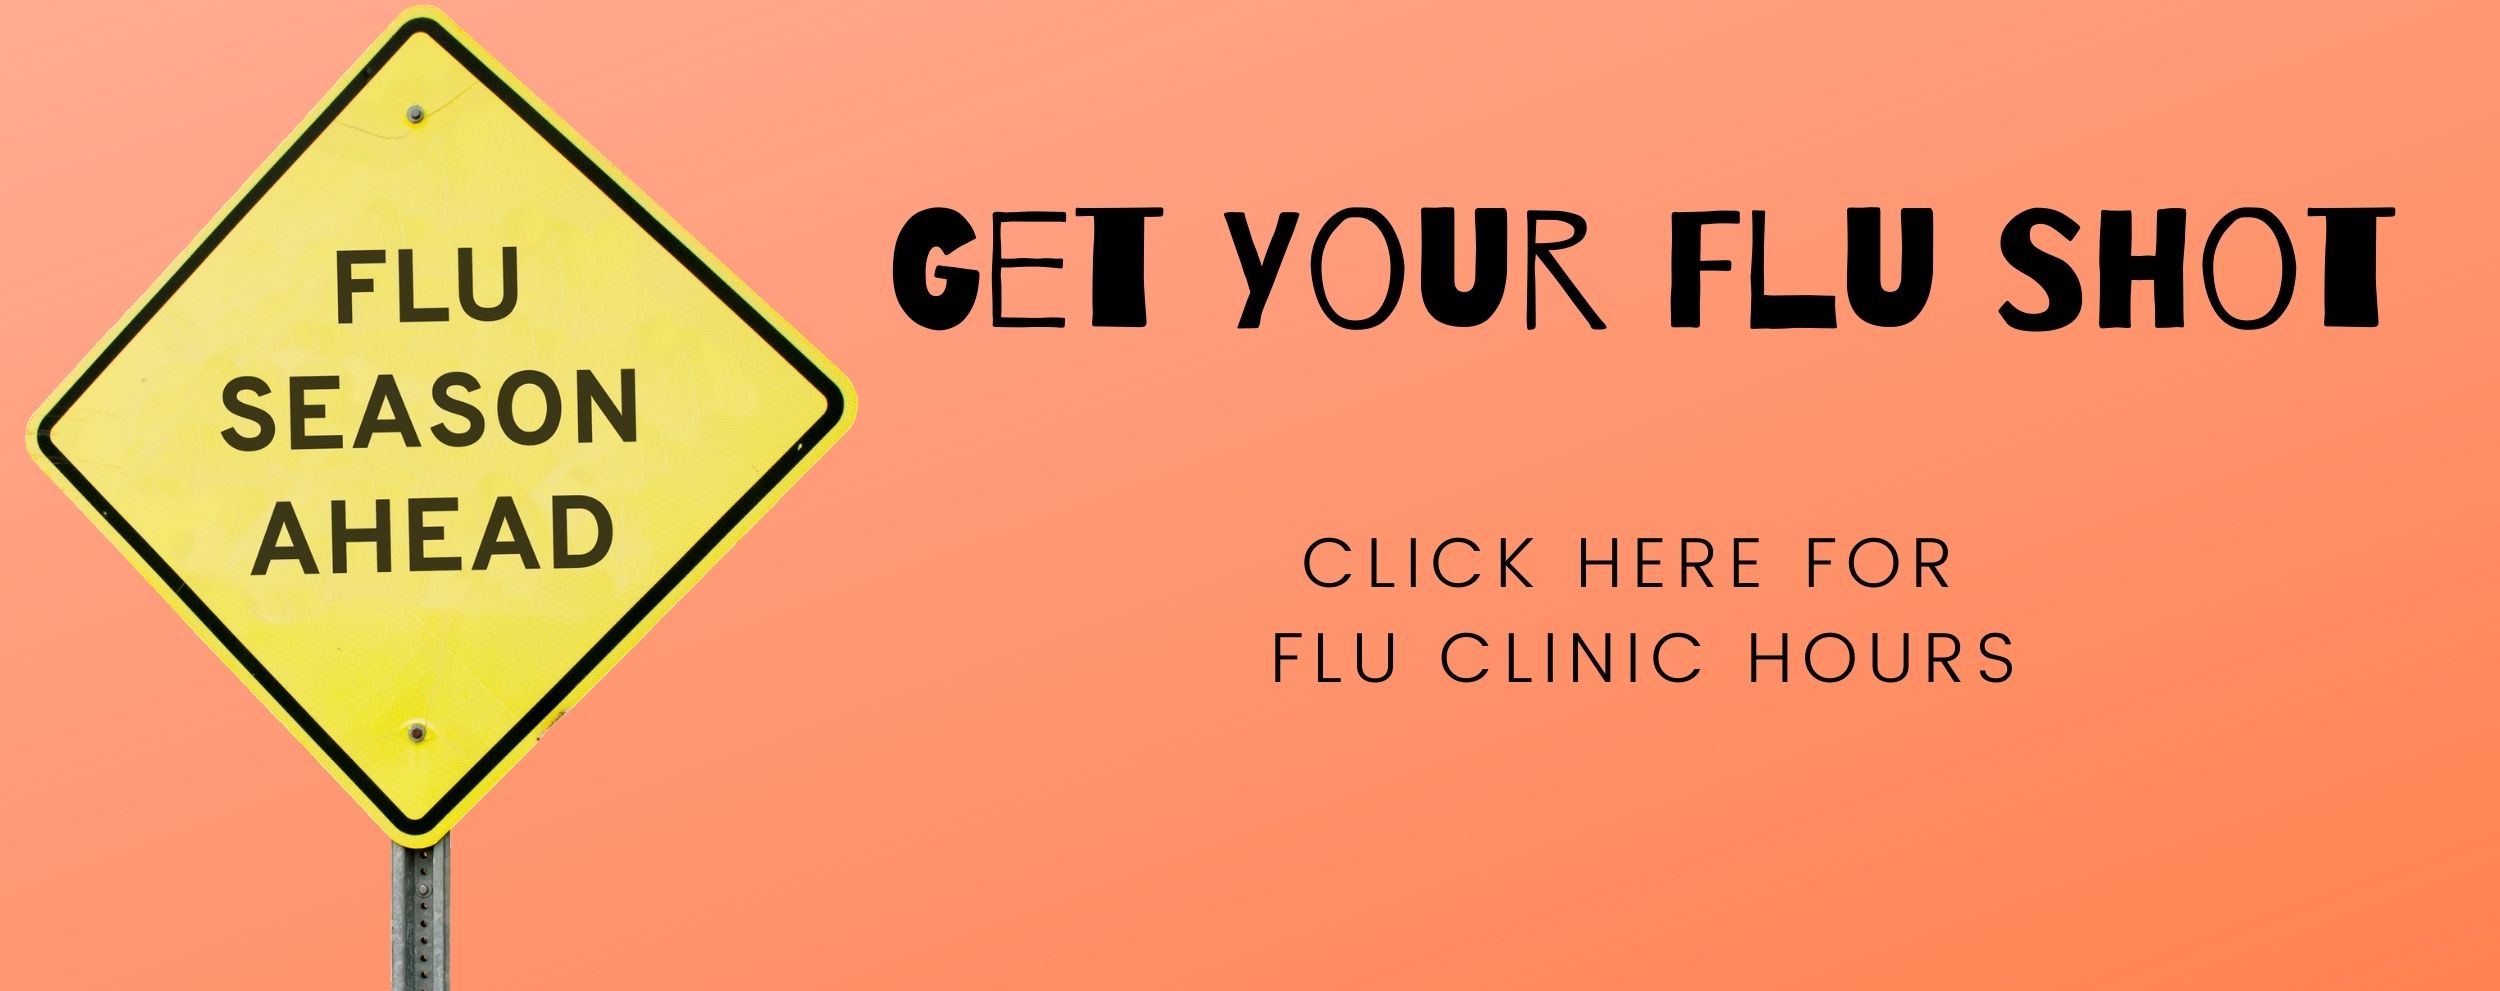 Flu Clinics - Clinicas de vacunacion contra la influenza - Klinik